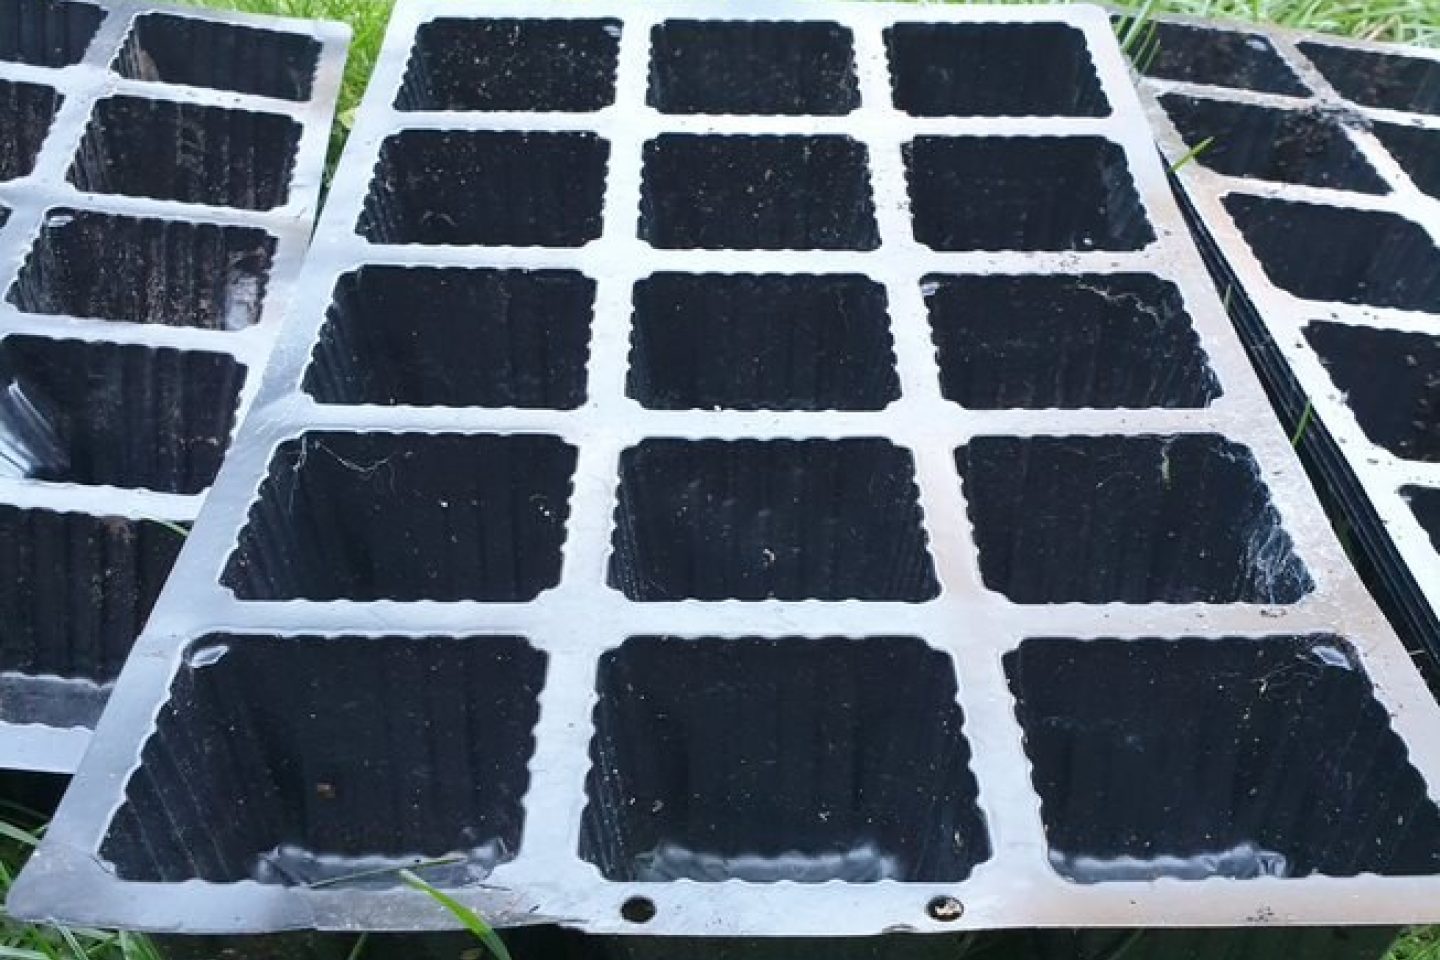 Seed trays